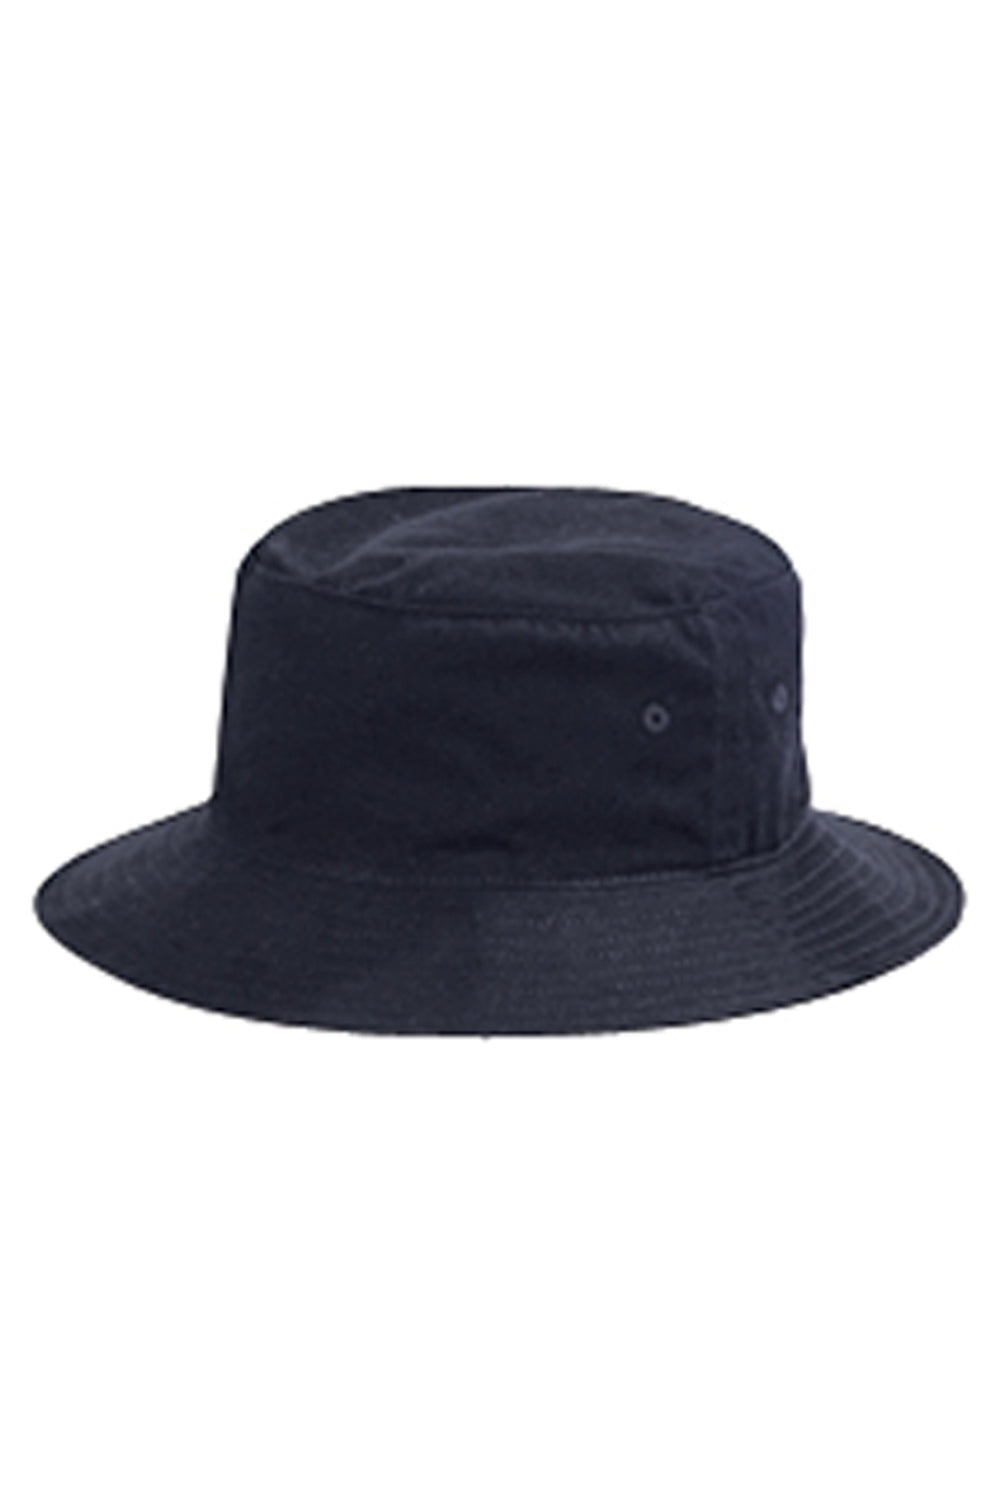 Big Accessories BX003 Mens Crusher Bucket Hat Black Flat Front